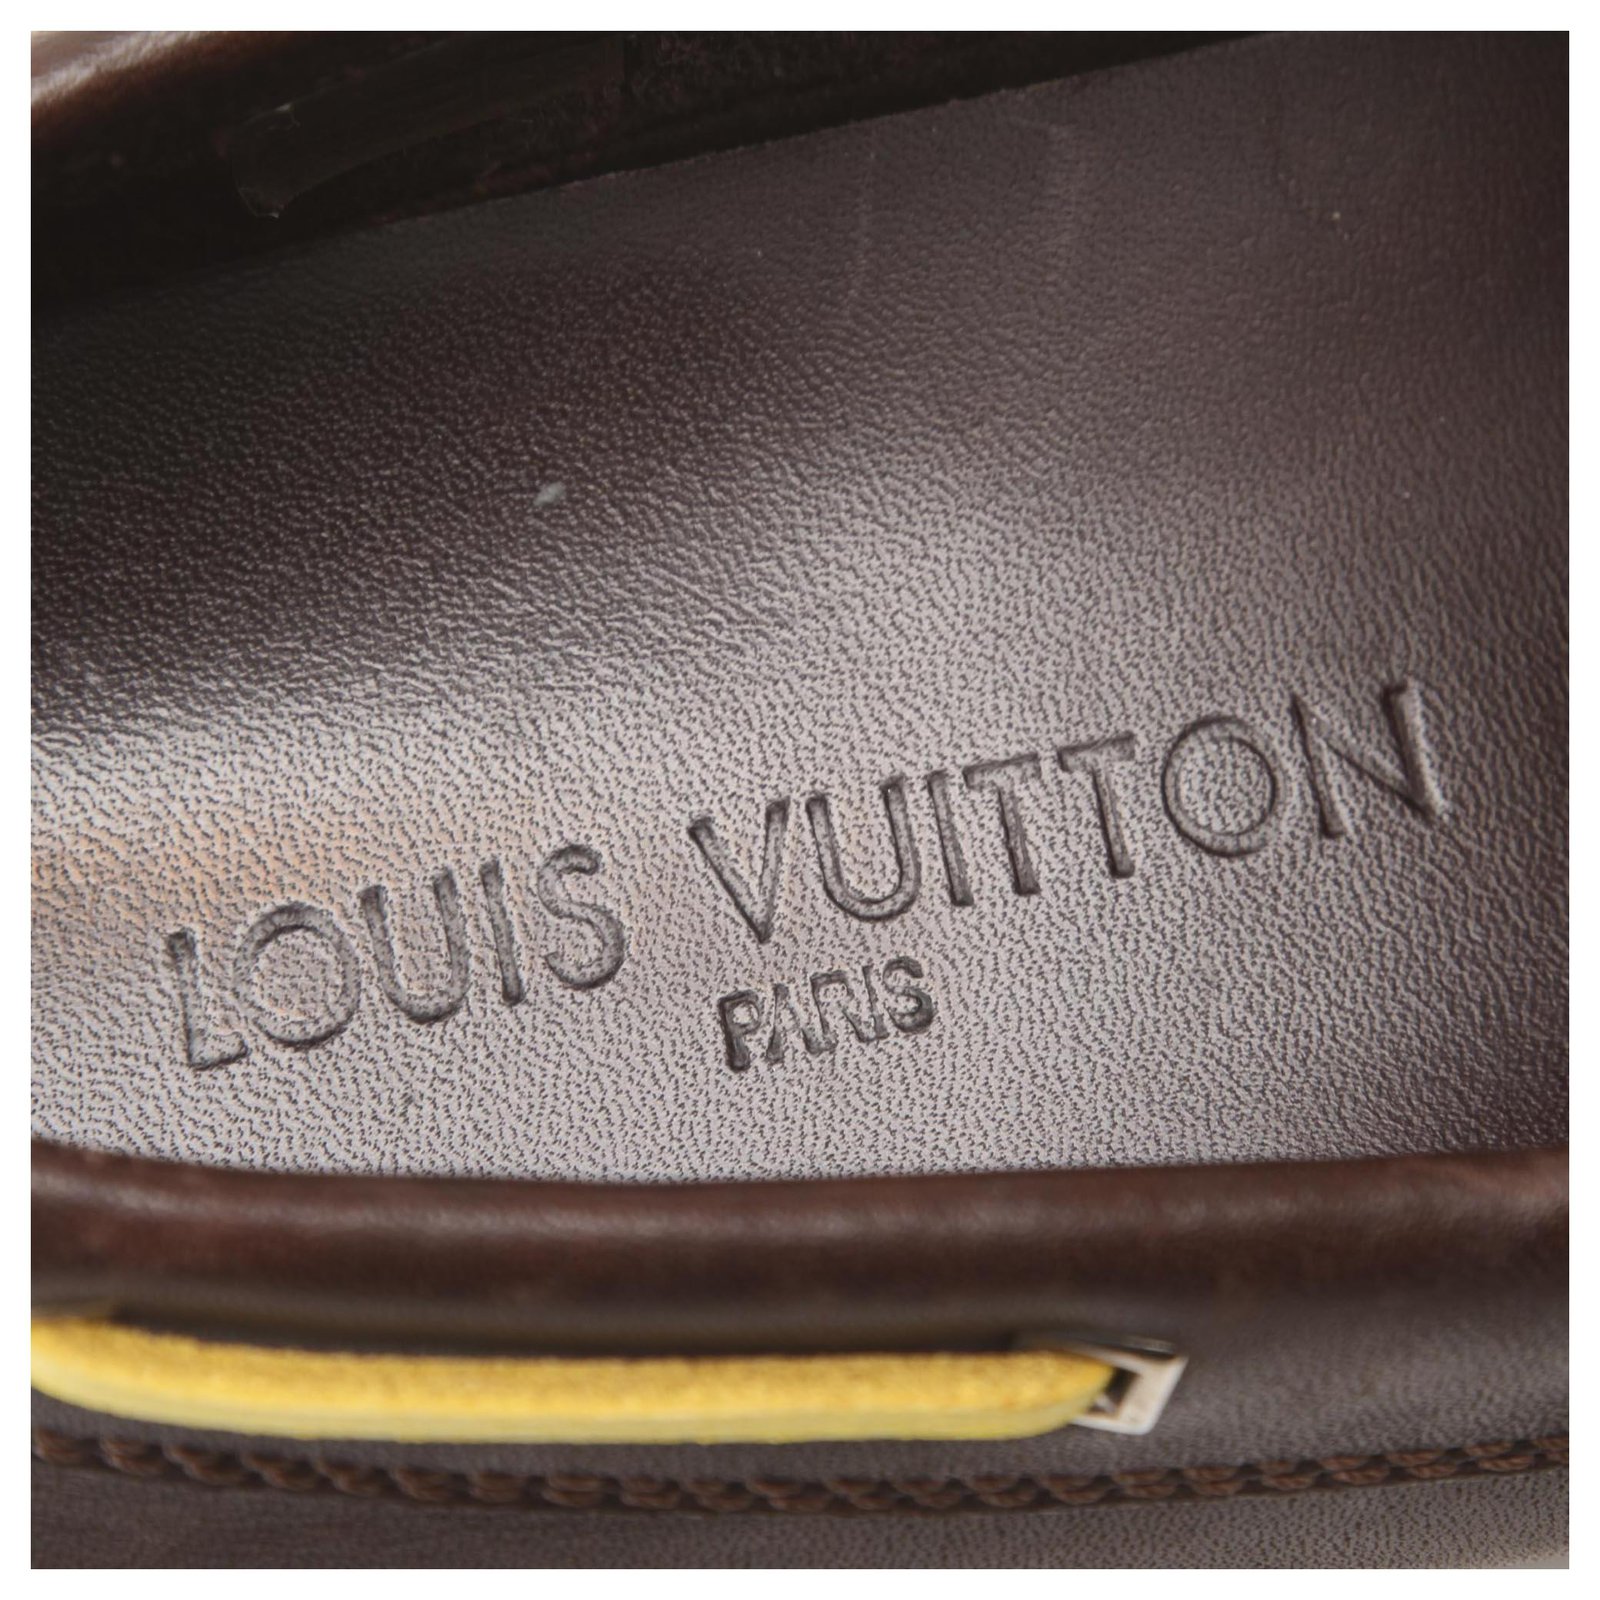 Louis Vuitton 1A9FEH LV Bold Chelsea Boot , Brown, Confirm